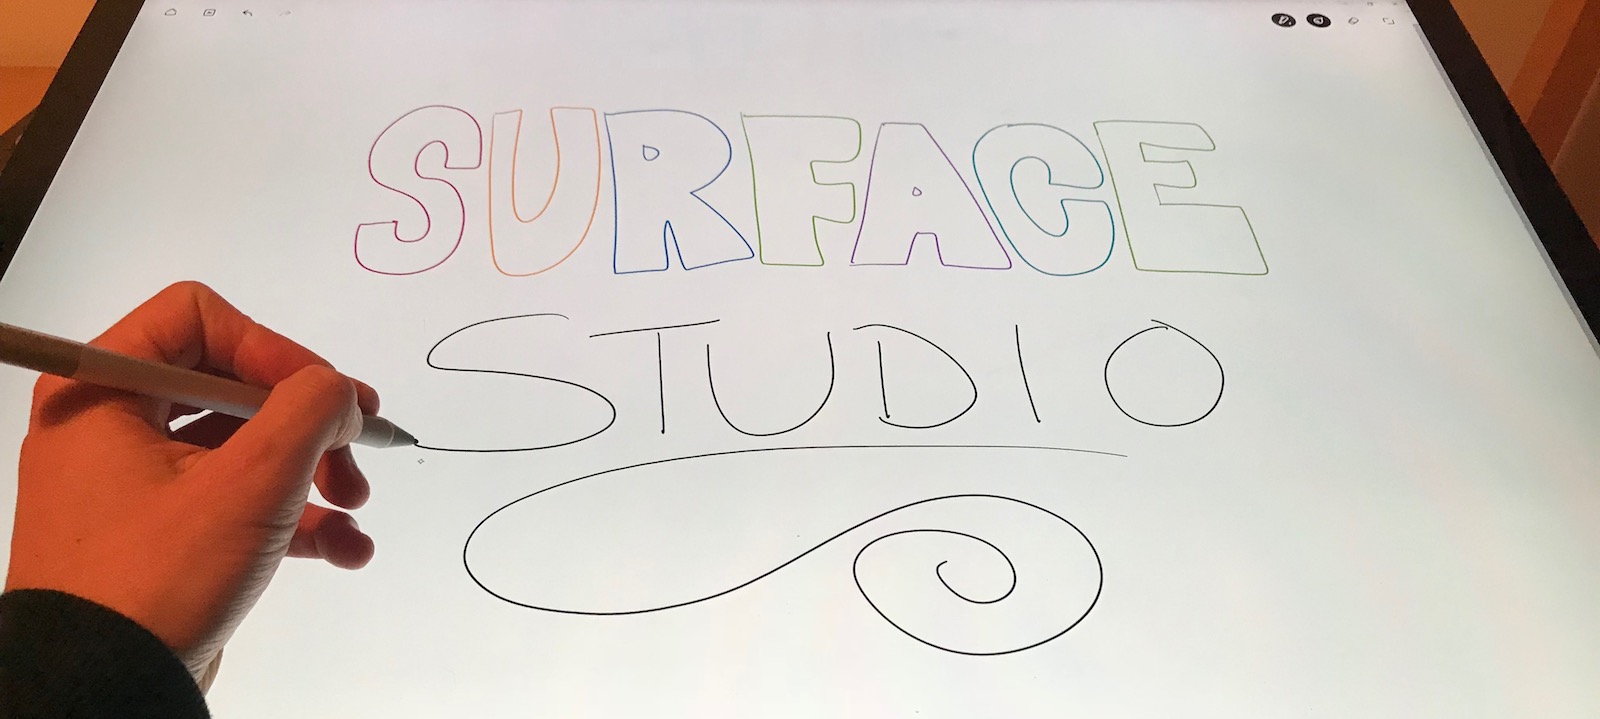 Surface studio